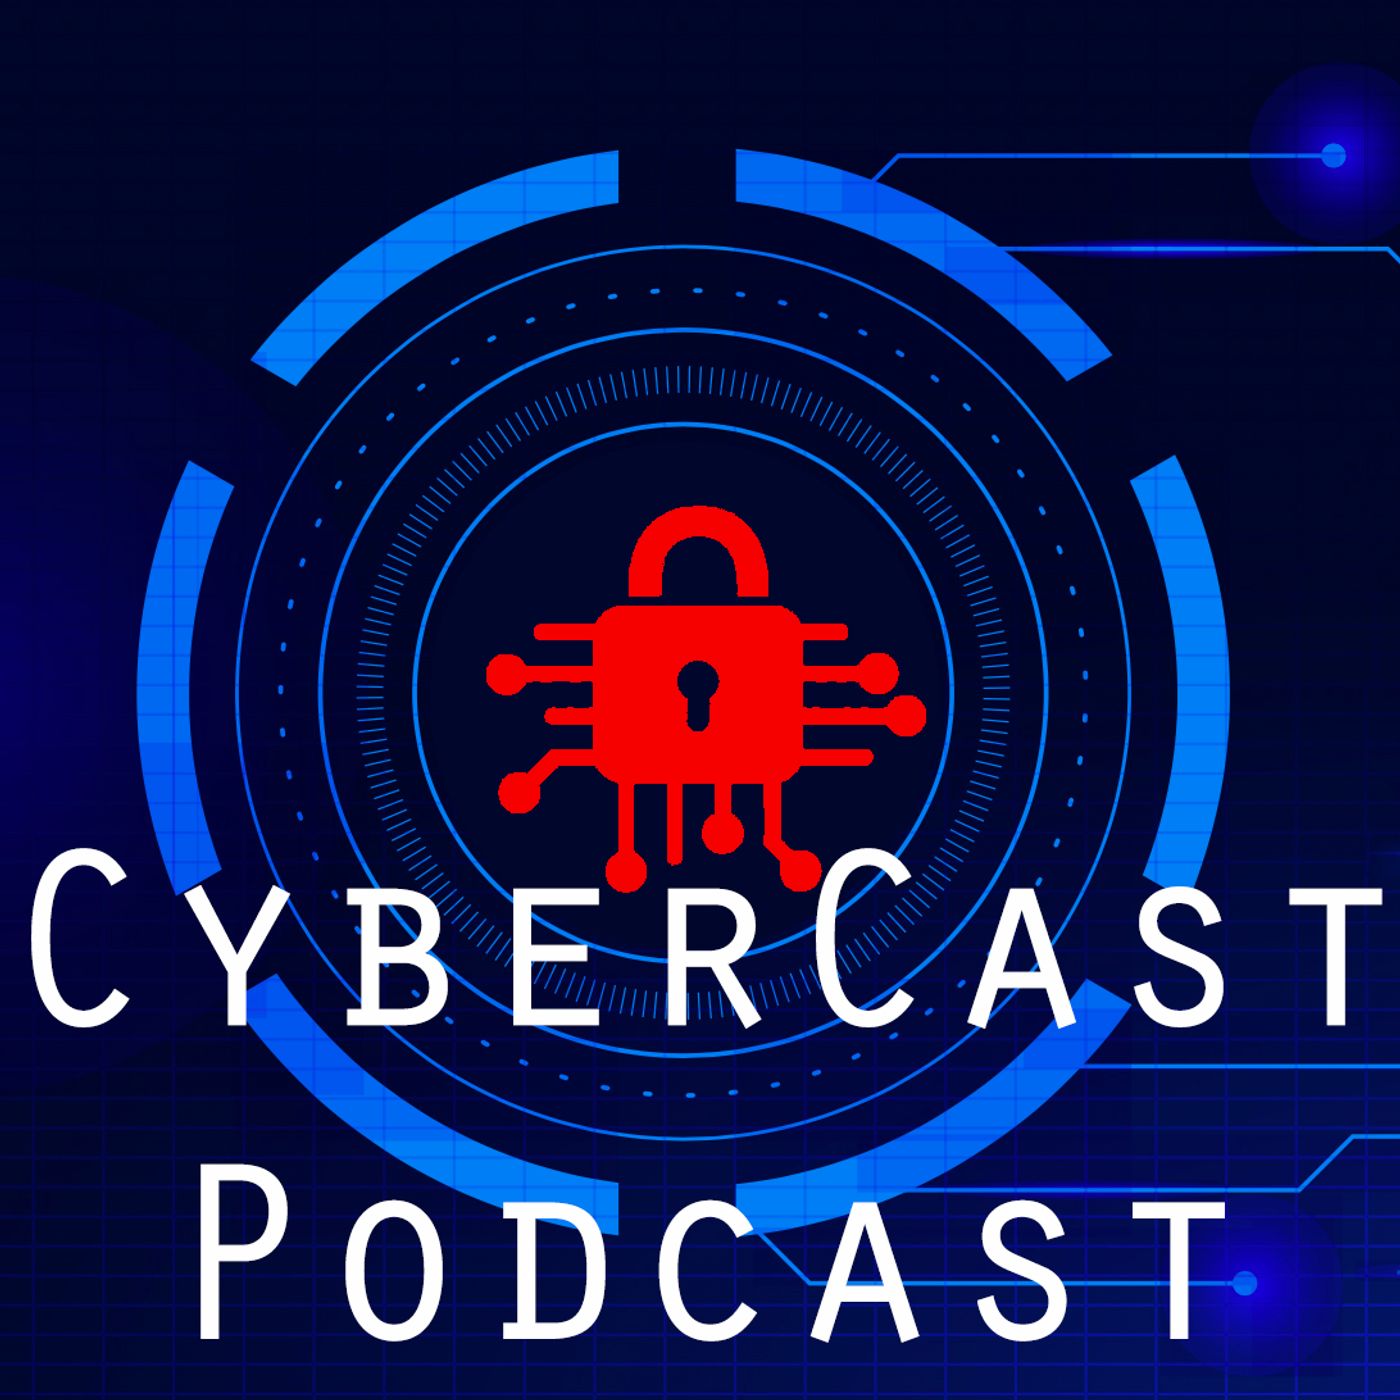 AUDIO BLOG: CyberCast Podcast Episode 1